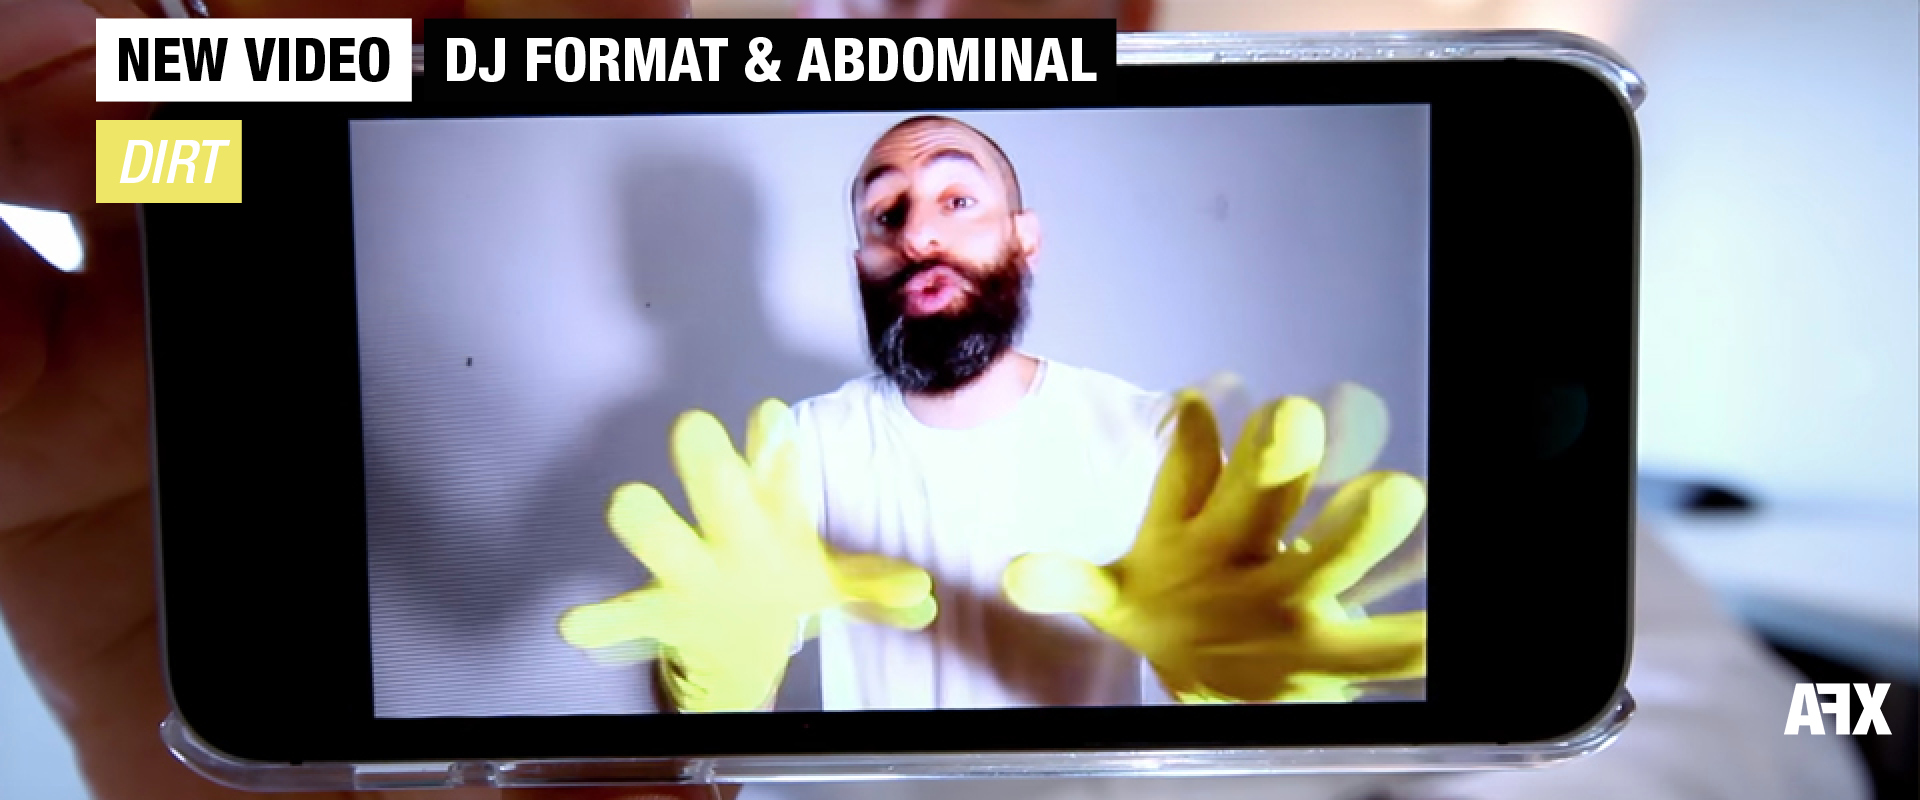 DJ FORMAT & ABDOMINAL : new music video “DIRT”